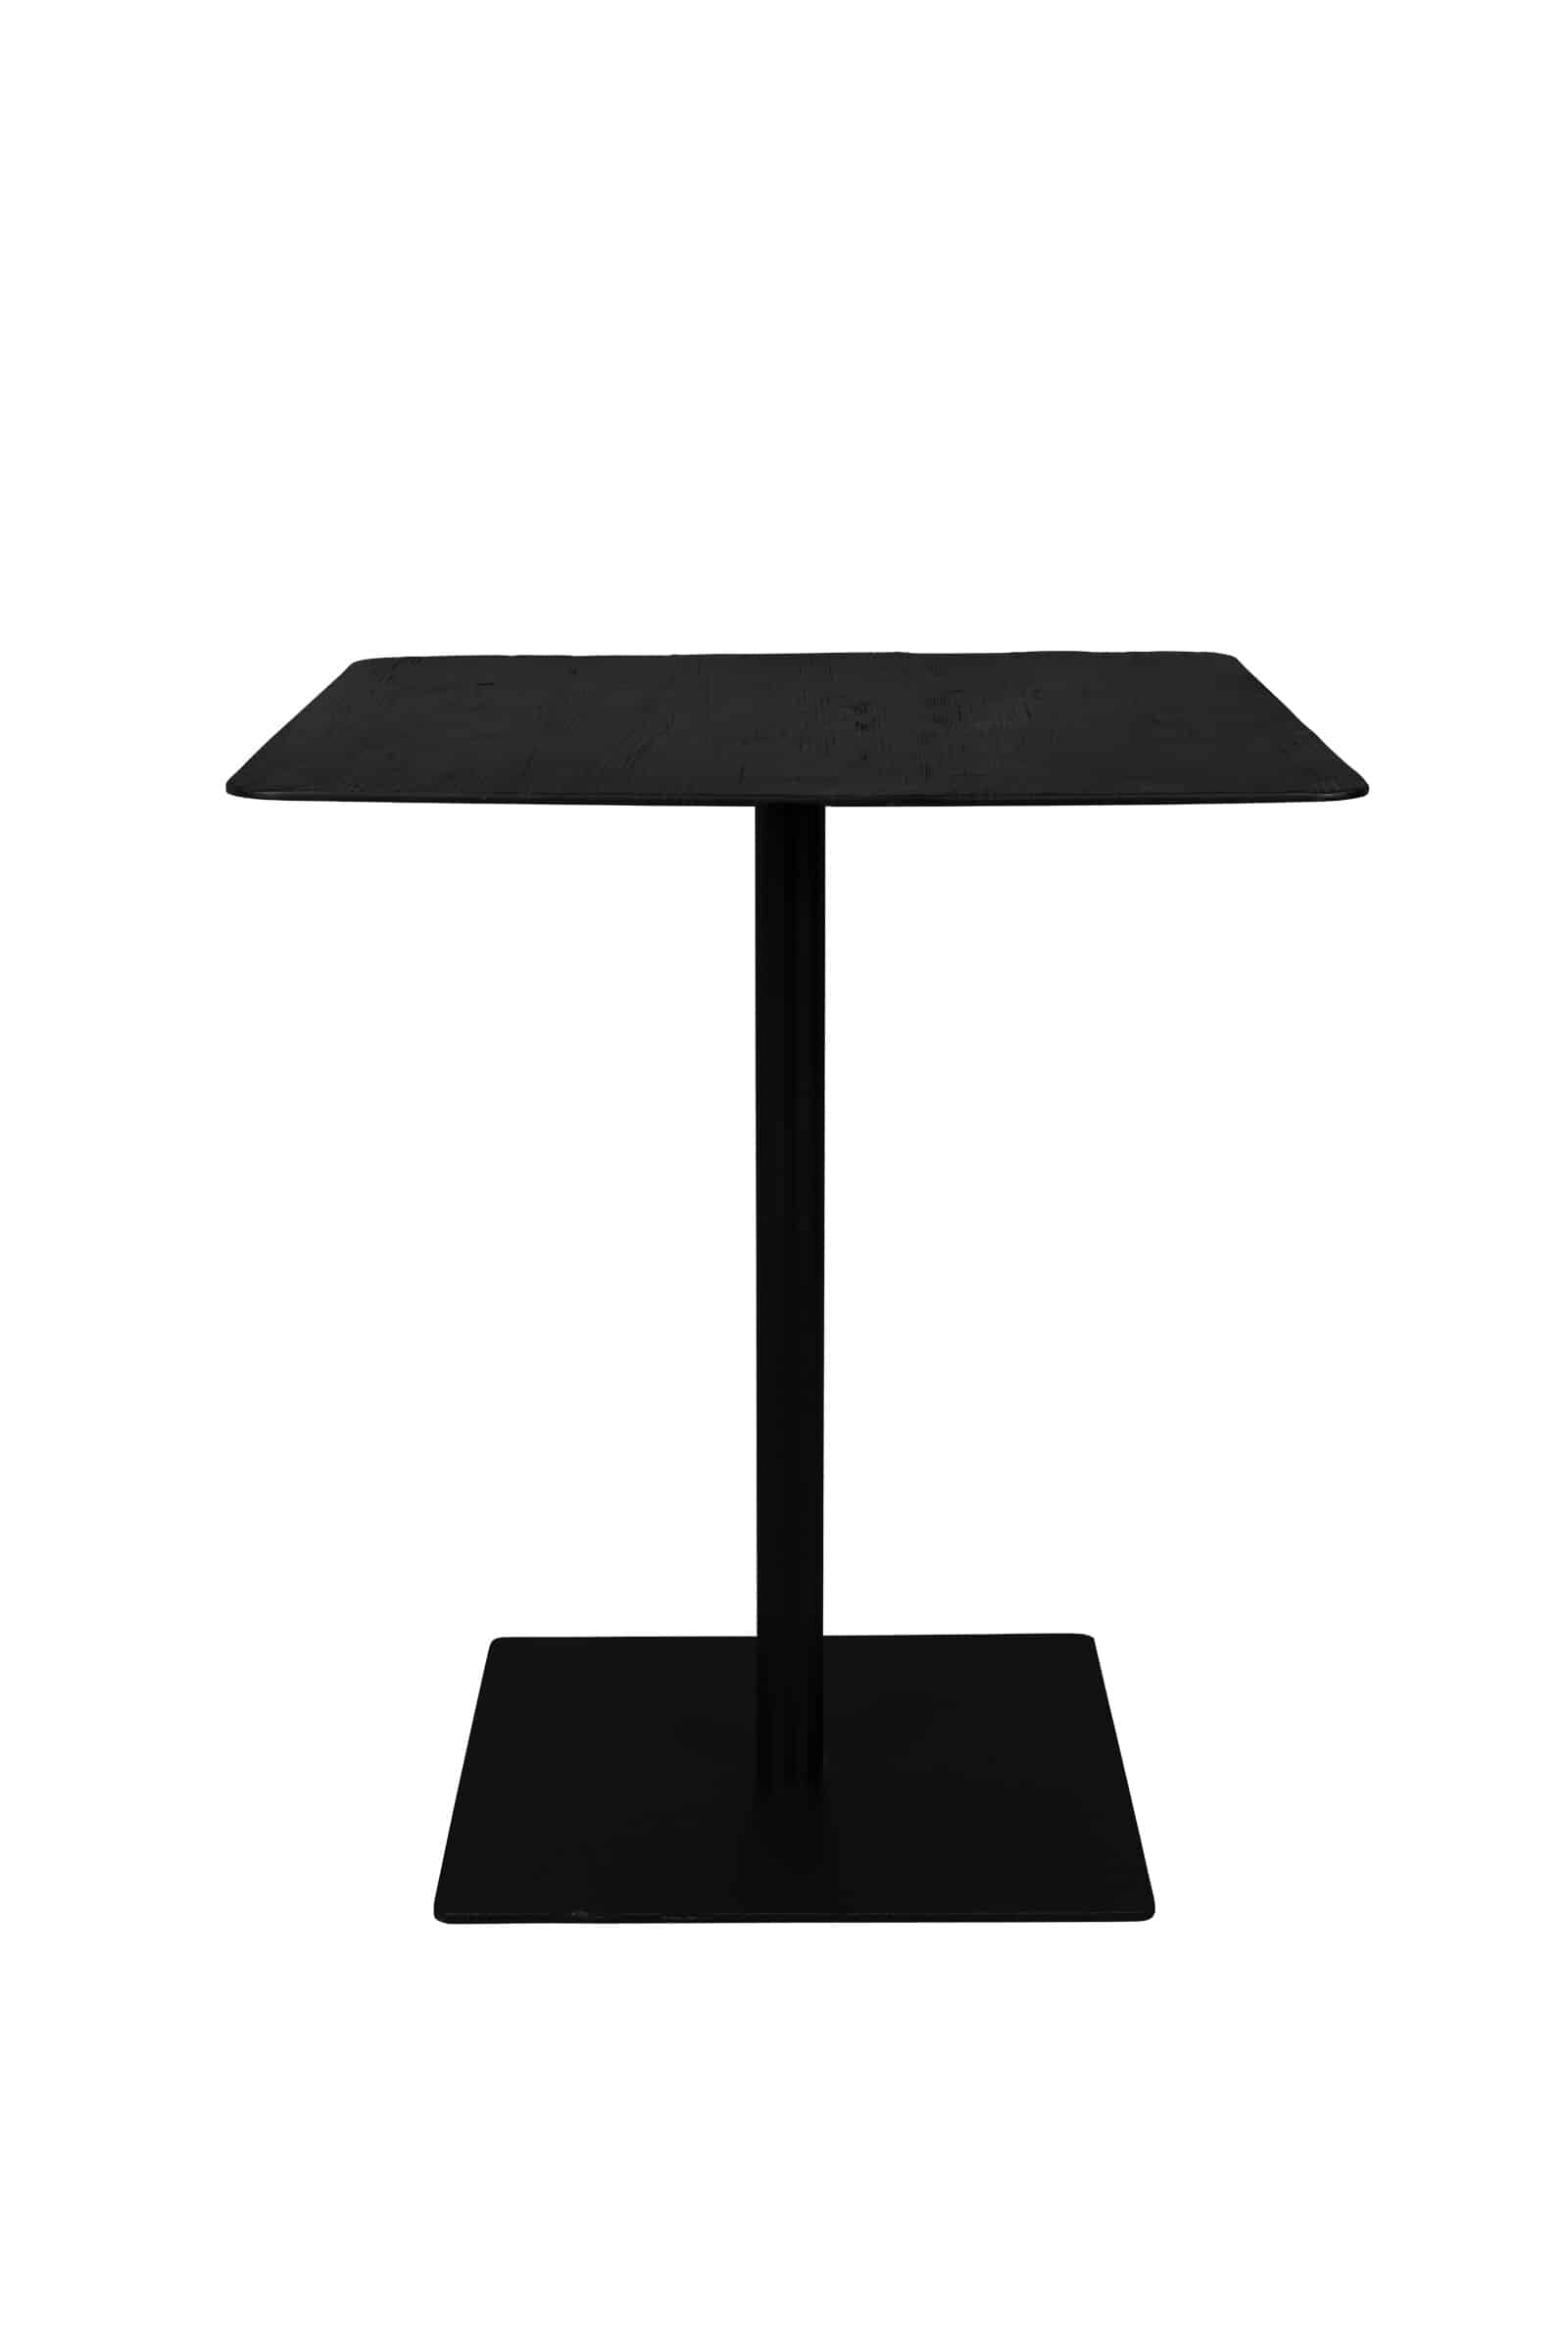 interval Vakman Onderstrepen Braza hoge tafel vierkant by Dutchbone - Designshopp